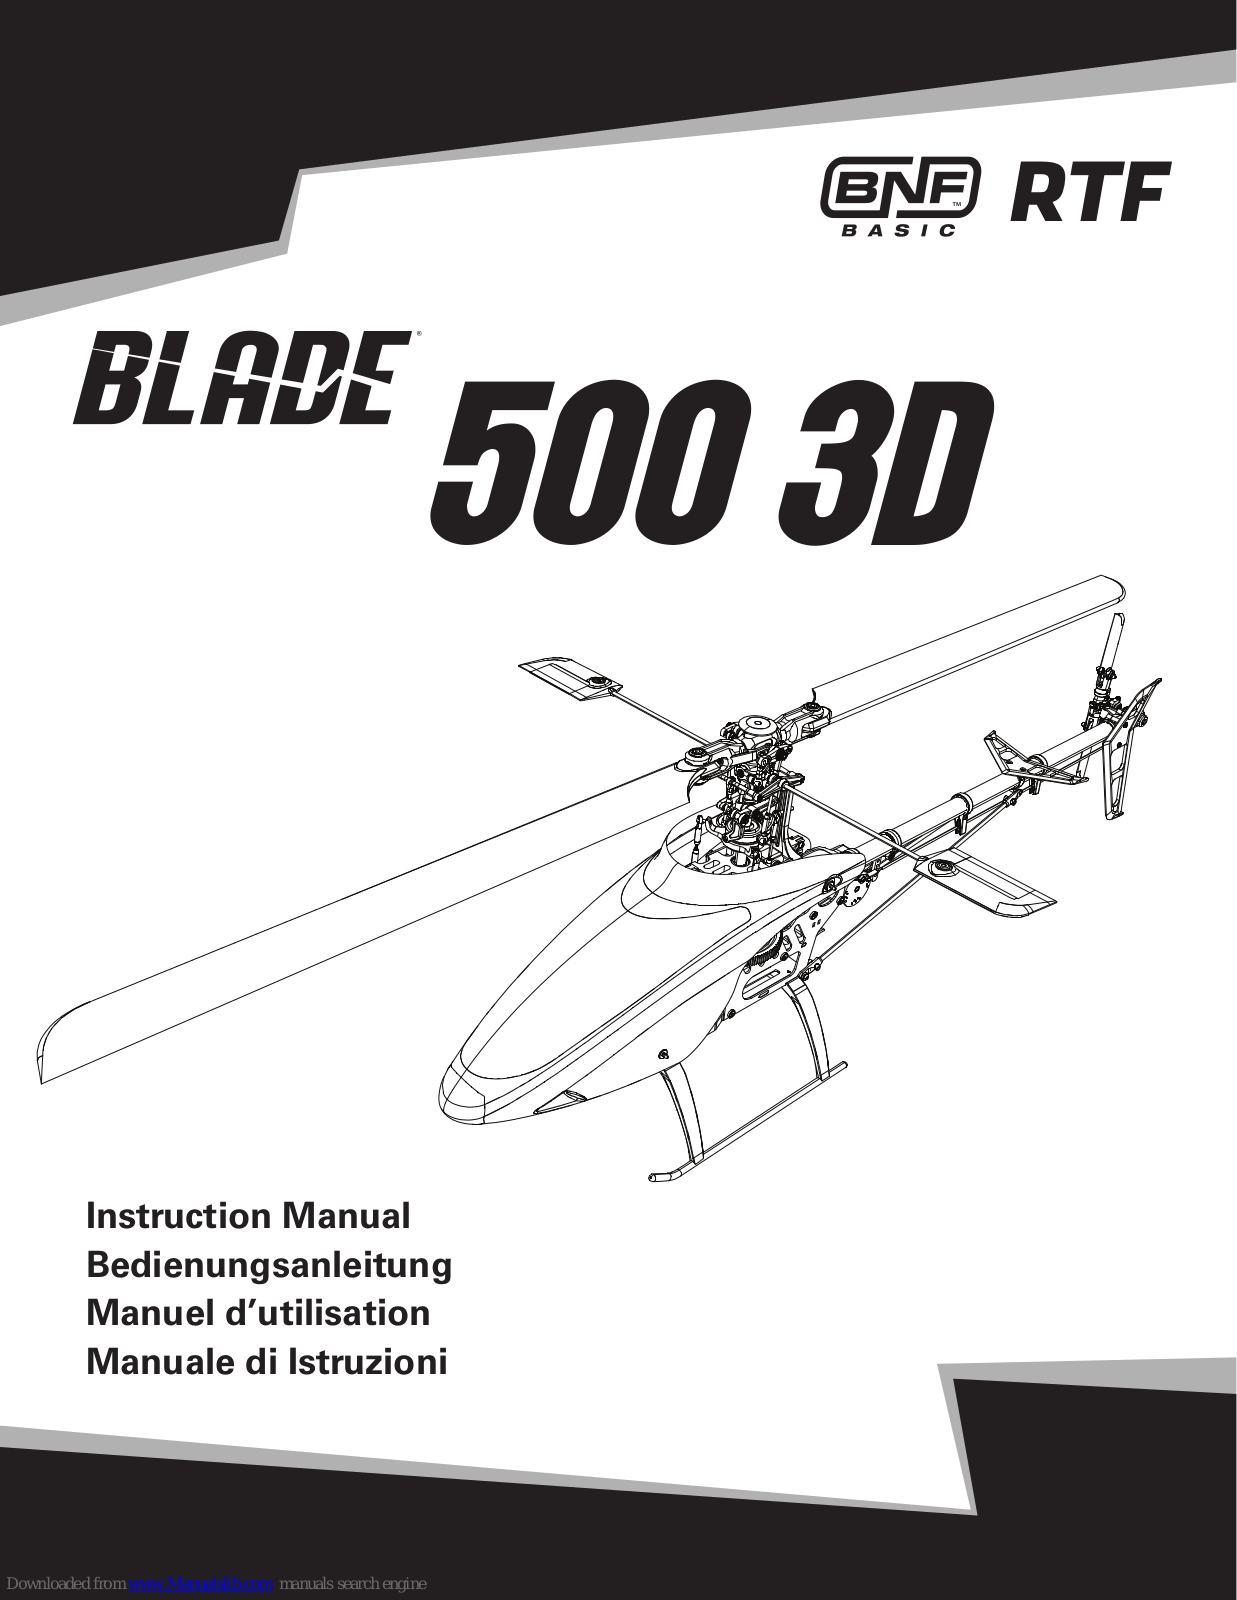 BNF Blade 500 3D, Blade 500 3D RTF, BLH1800 Instruction Manual